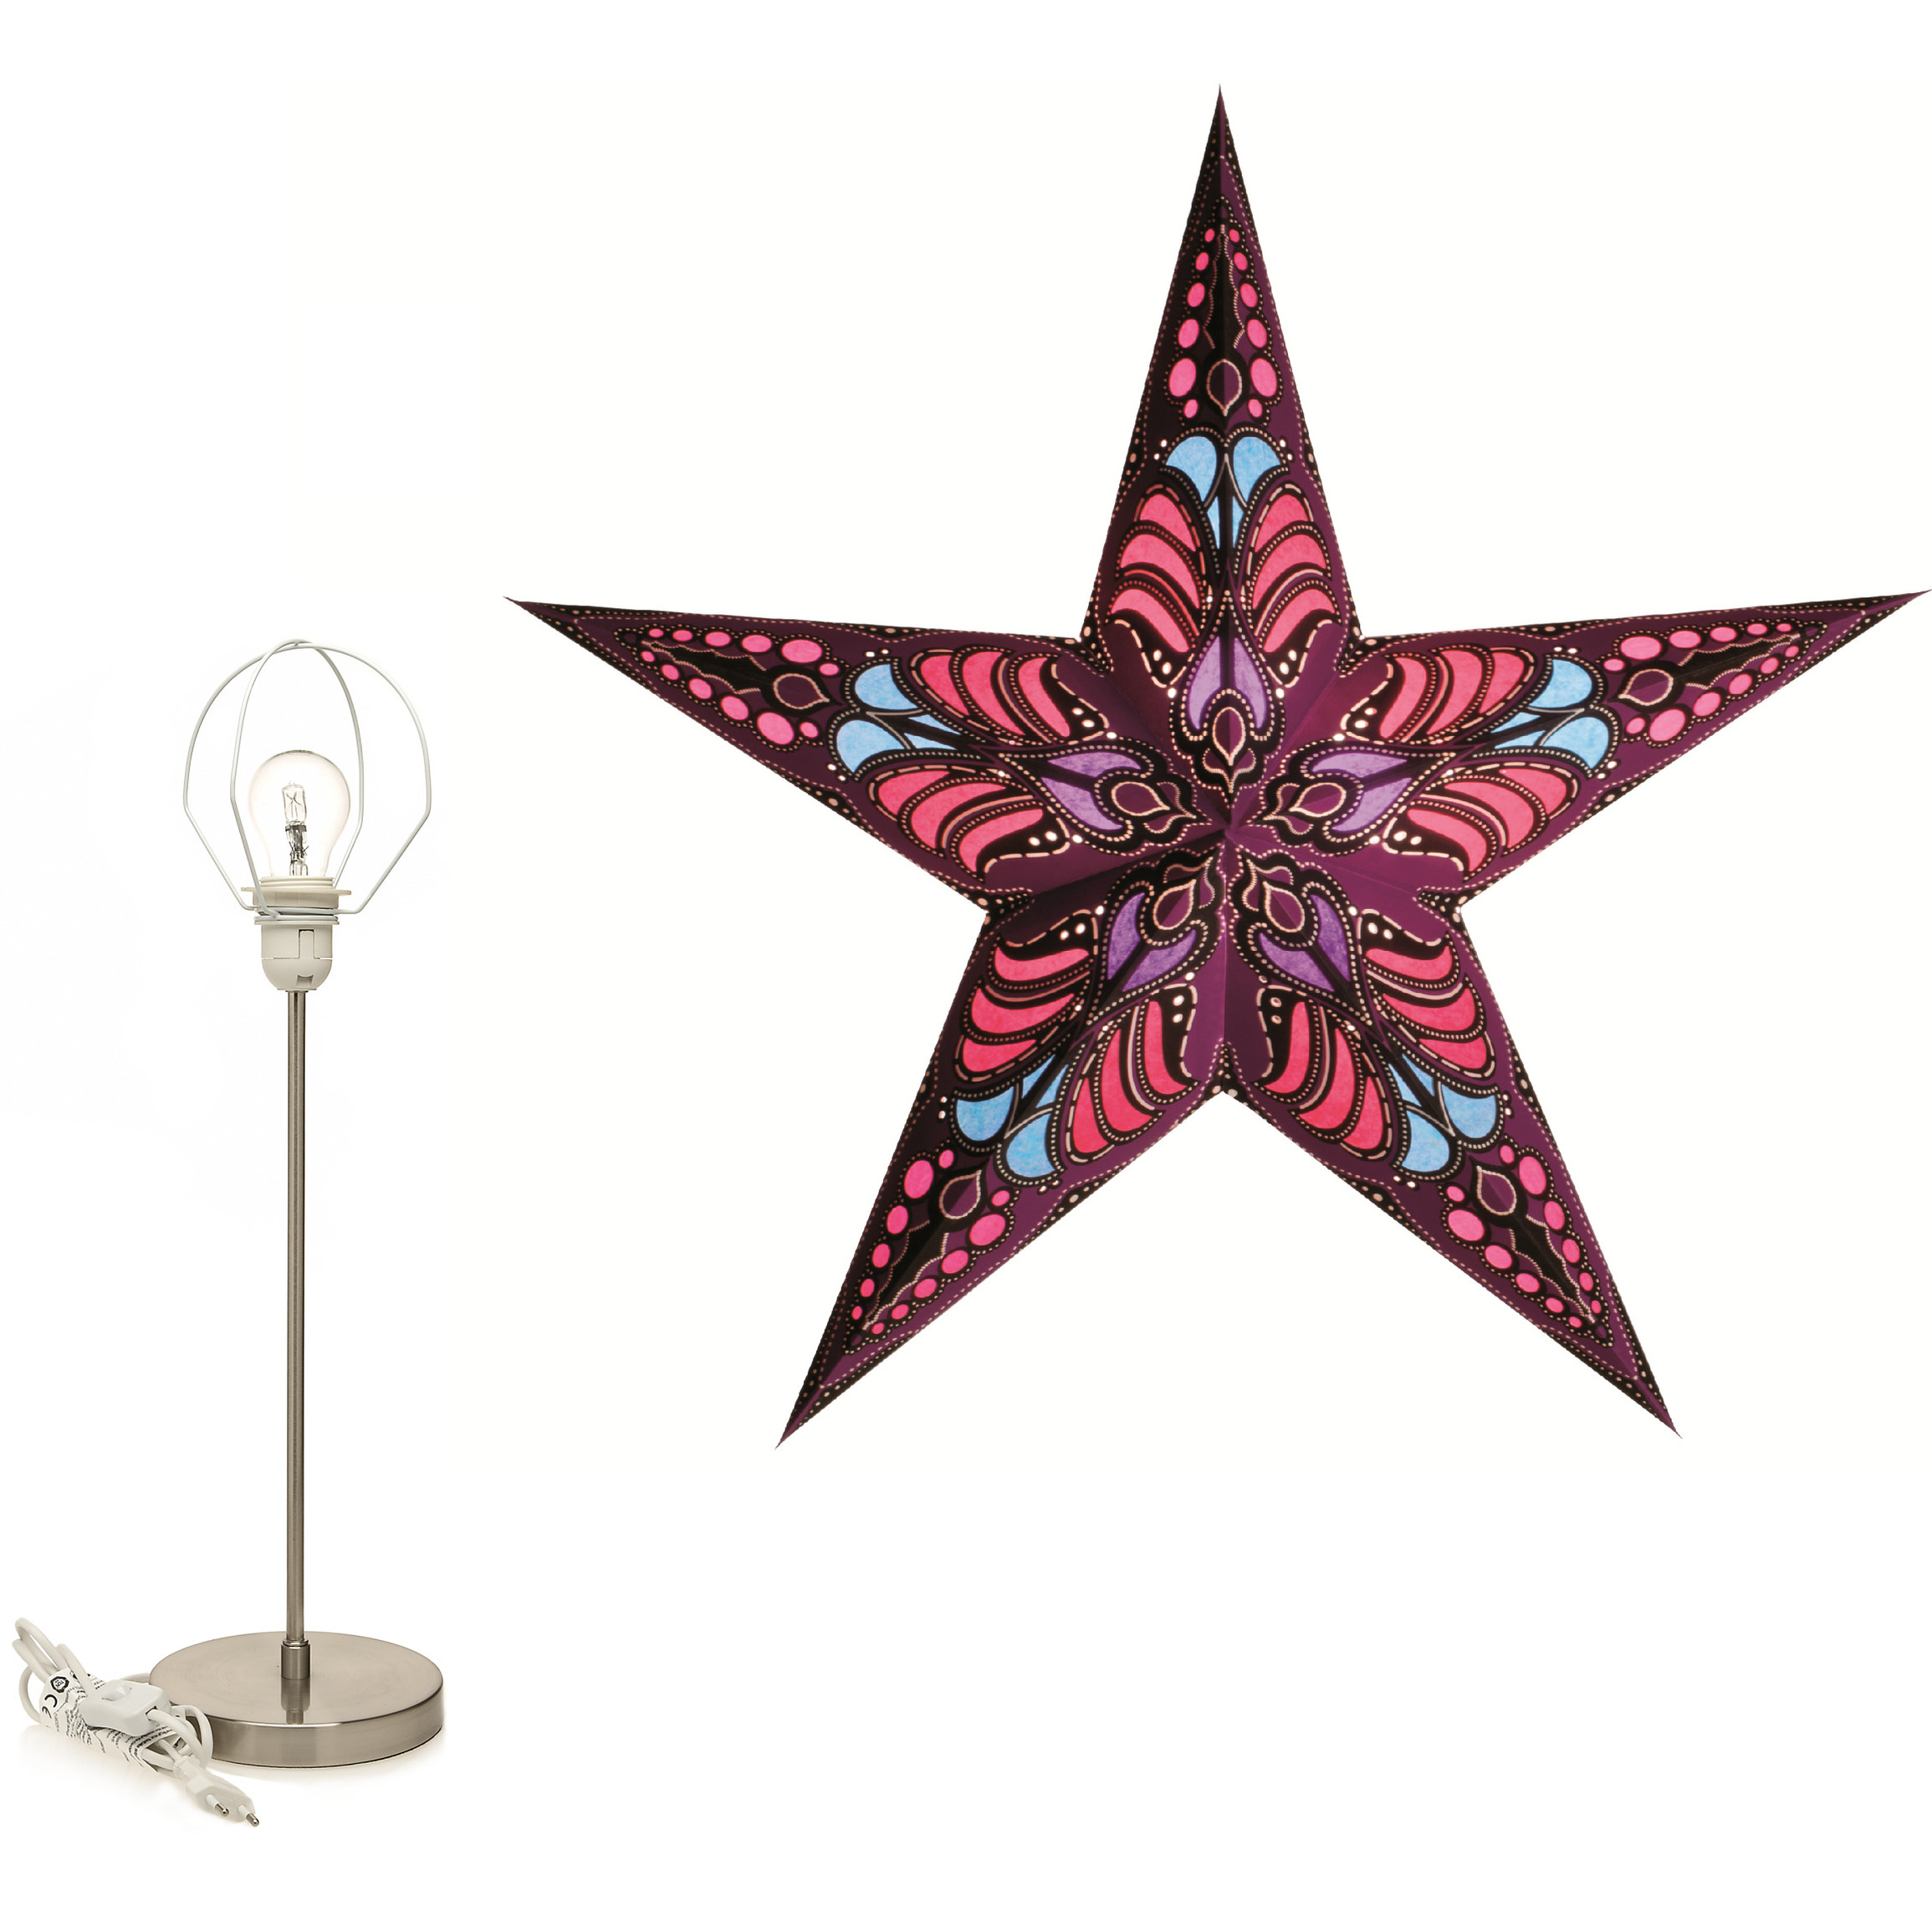 Decoratie kerstster paars 60 cm inclusief tafellamp/lamp standaard